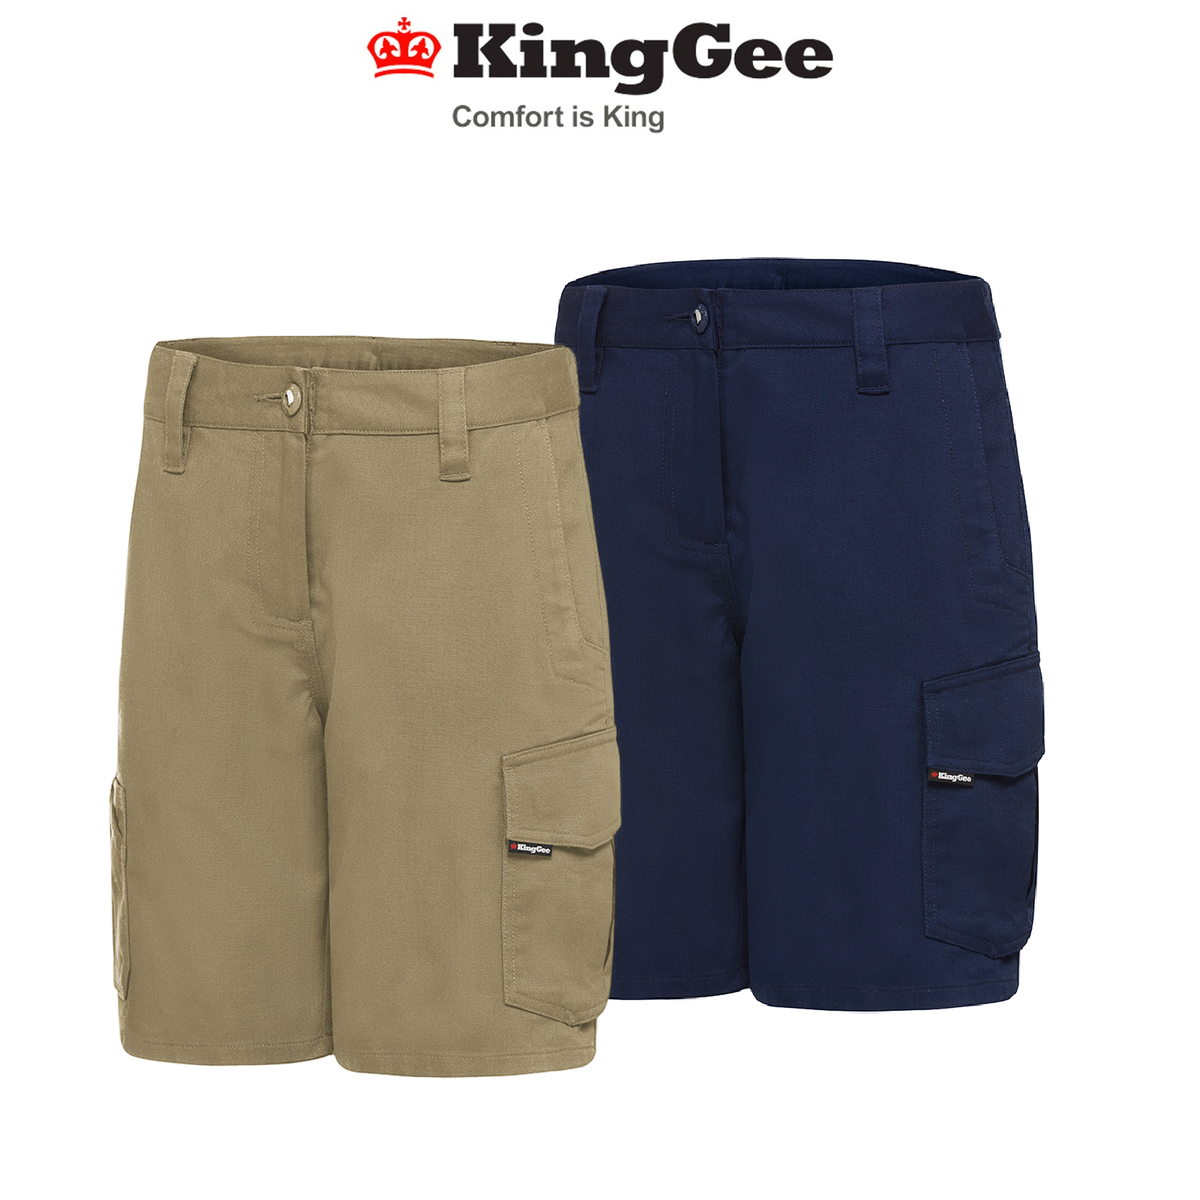 KingGee Womens WorkCool Shorts Durable Reinforced Ripstop Fabric Workwear K47000